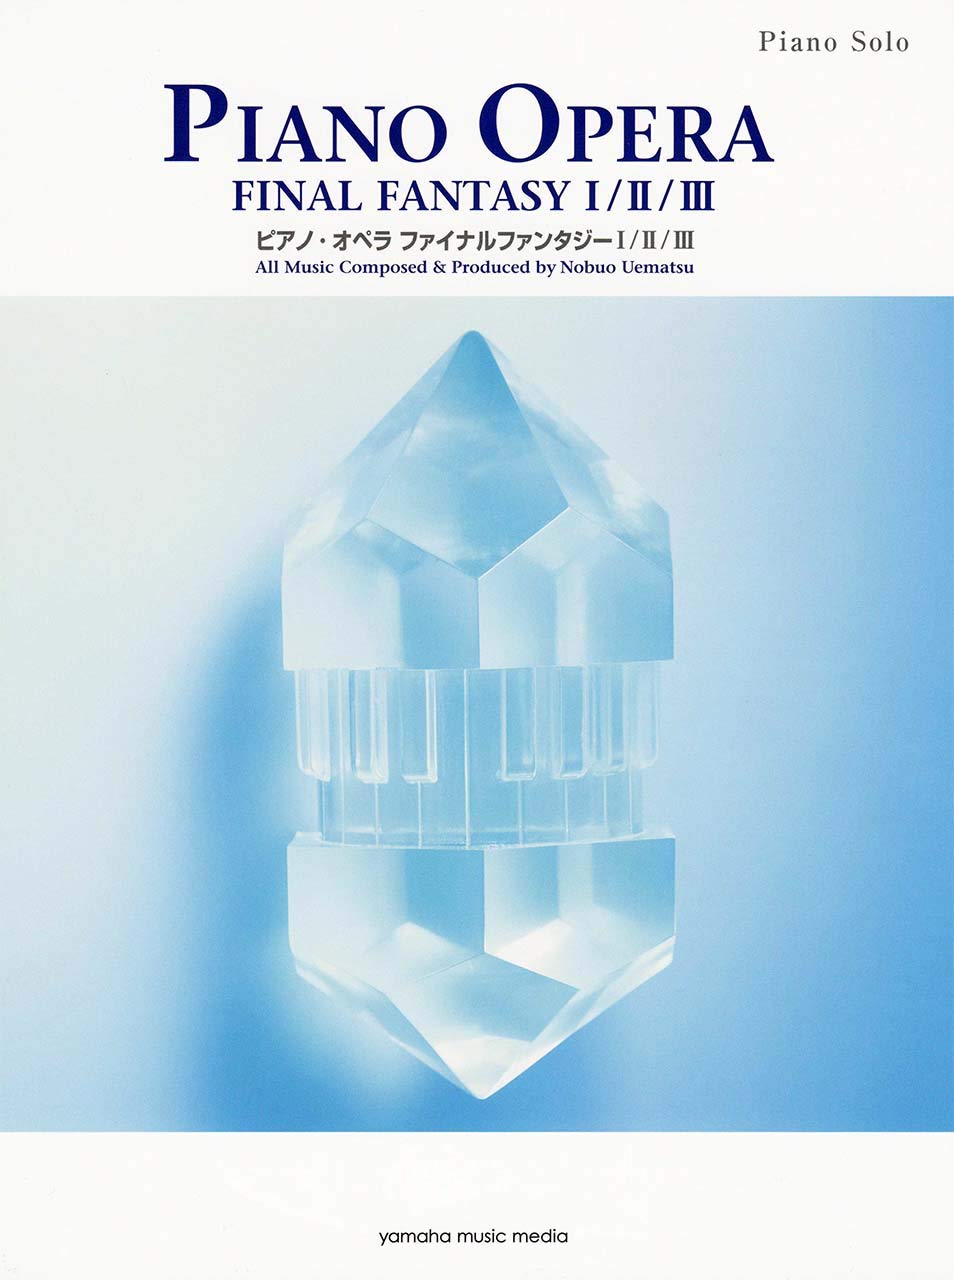 Final Fantasy I/II/III Piano Opera for Advanced Piano Solo